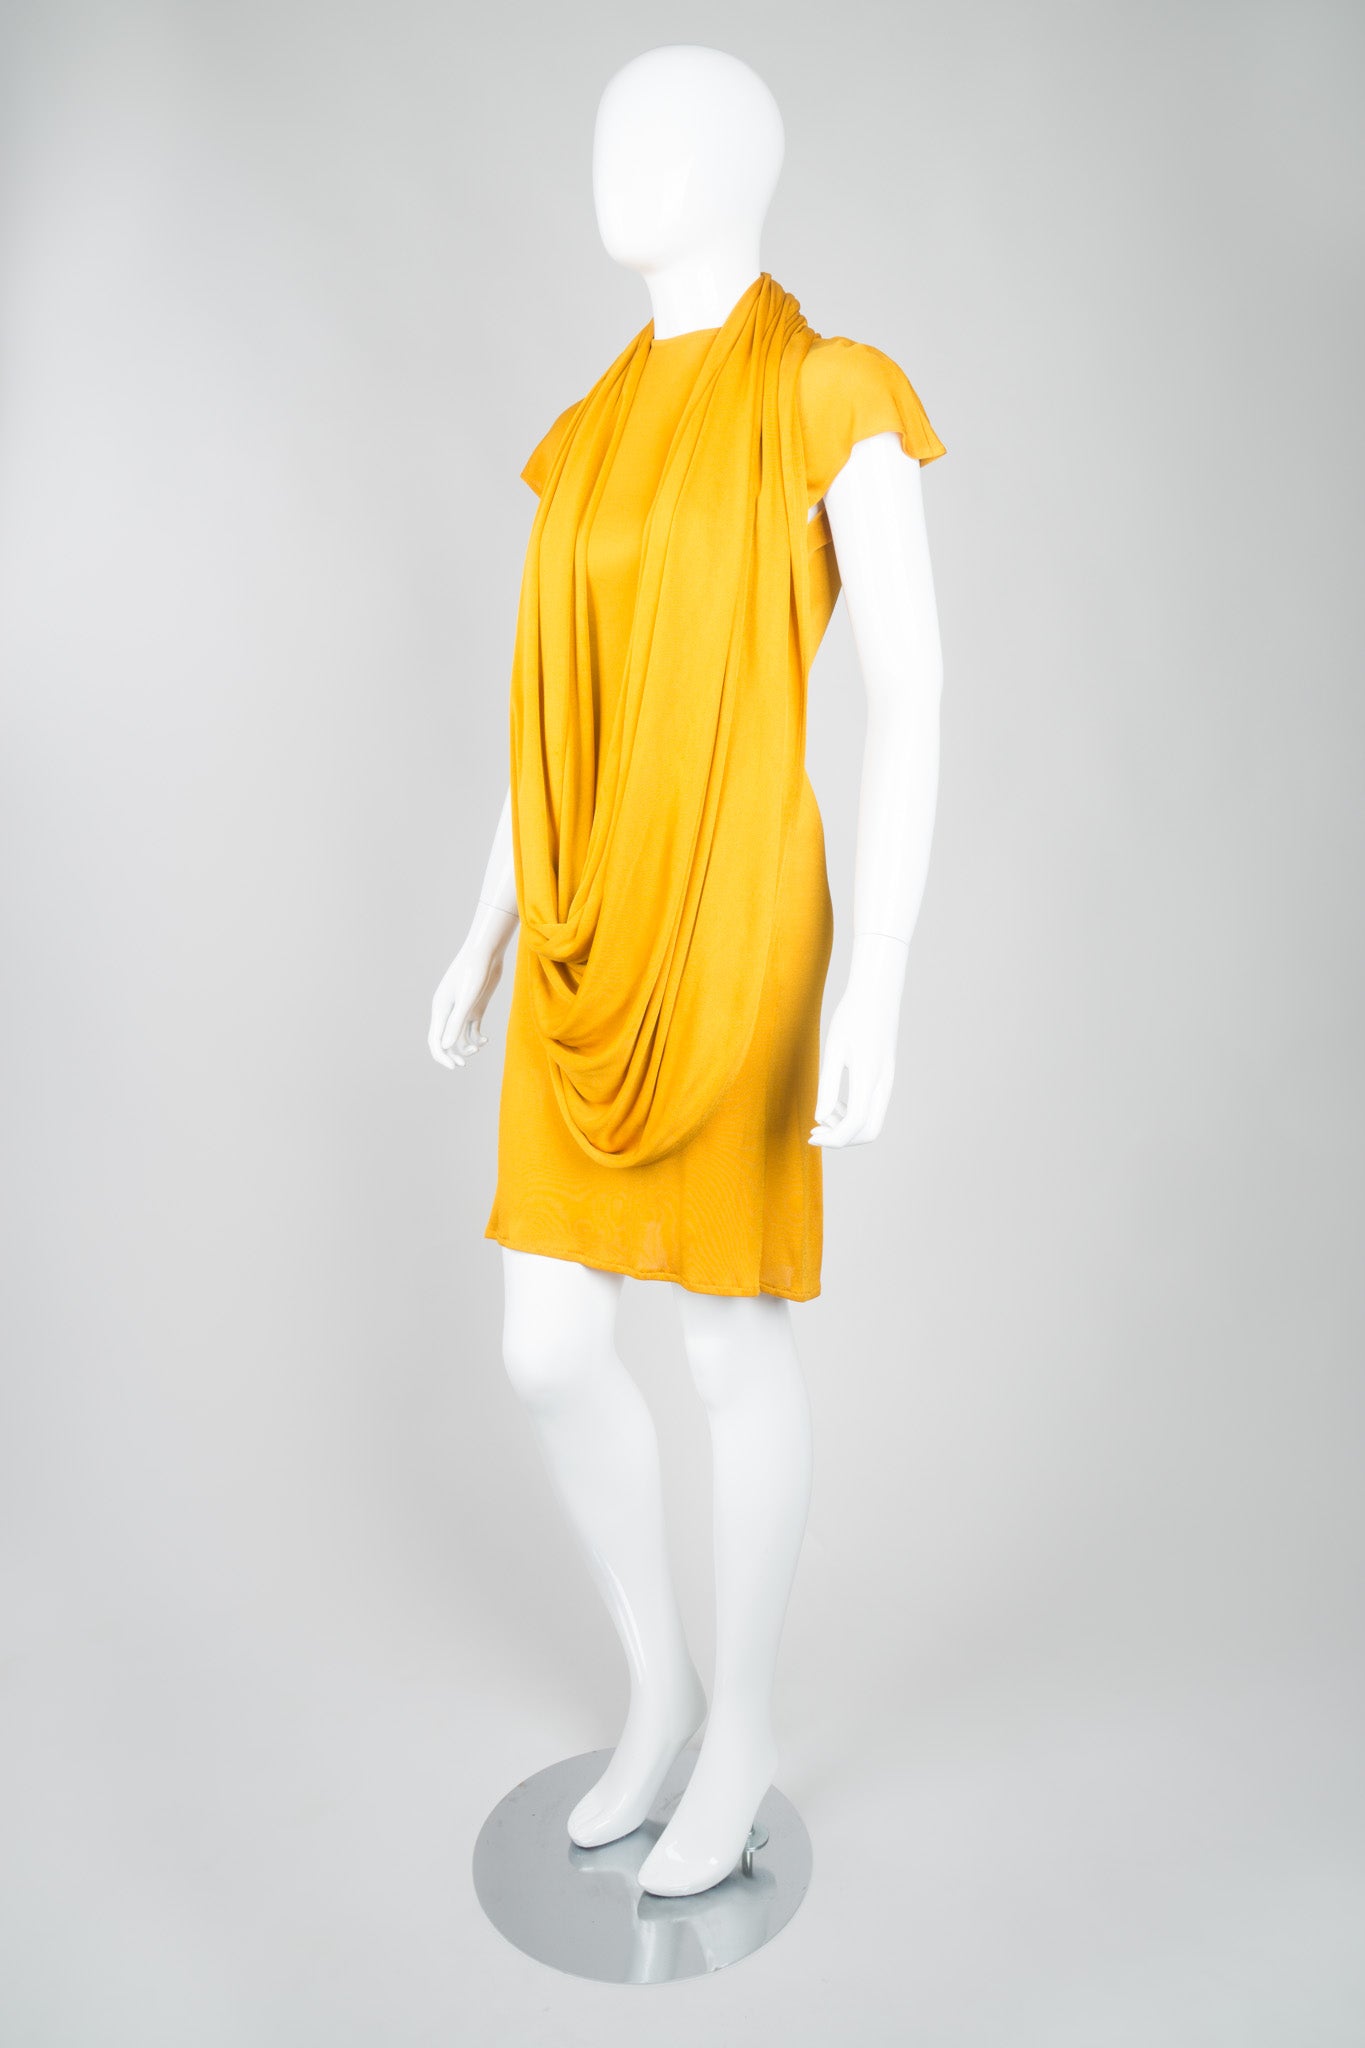 OMO Norma Kamali Monk Robe Sash Jersey Dress